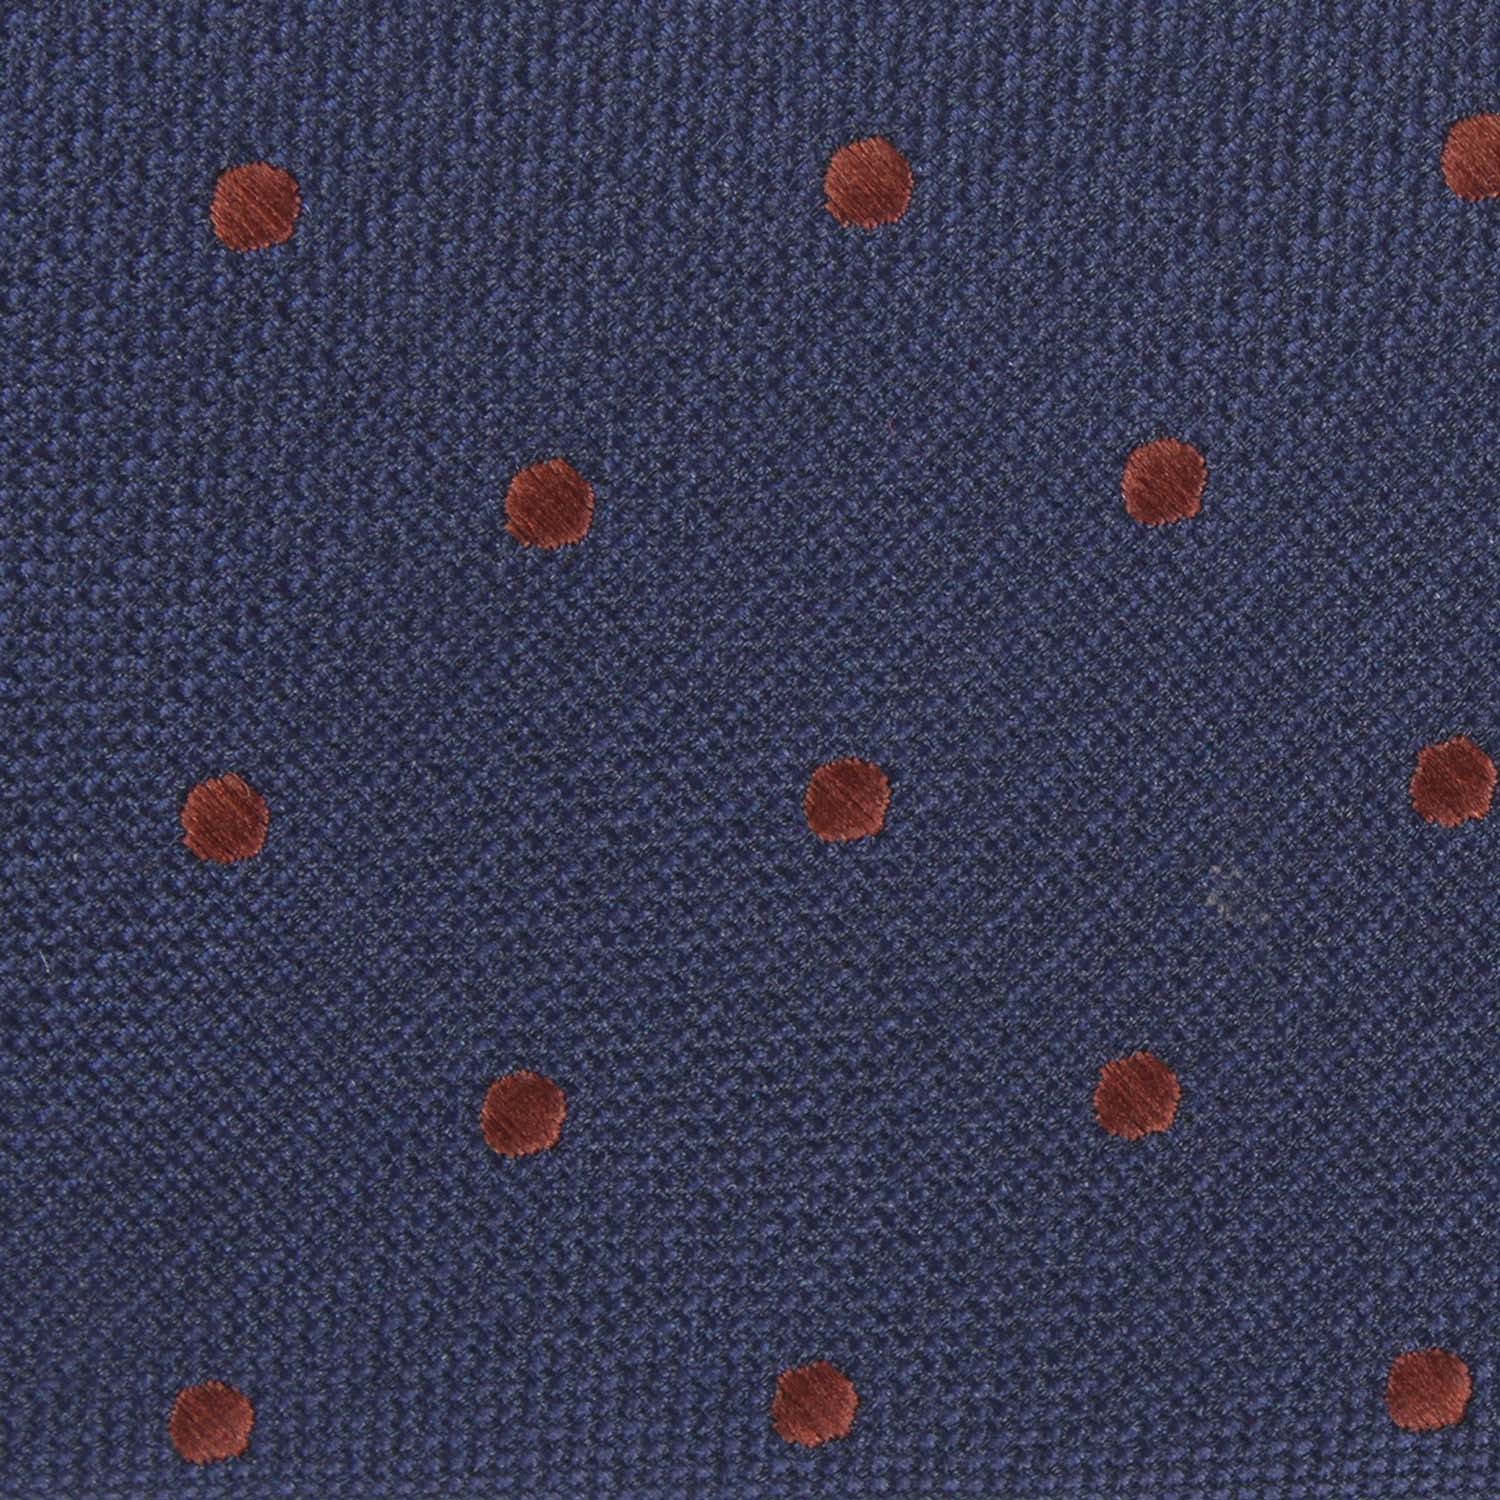 Navy Blue with Brown Polka Dots Fabric Self Tie Diamond Tip Bow TieM128